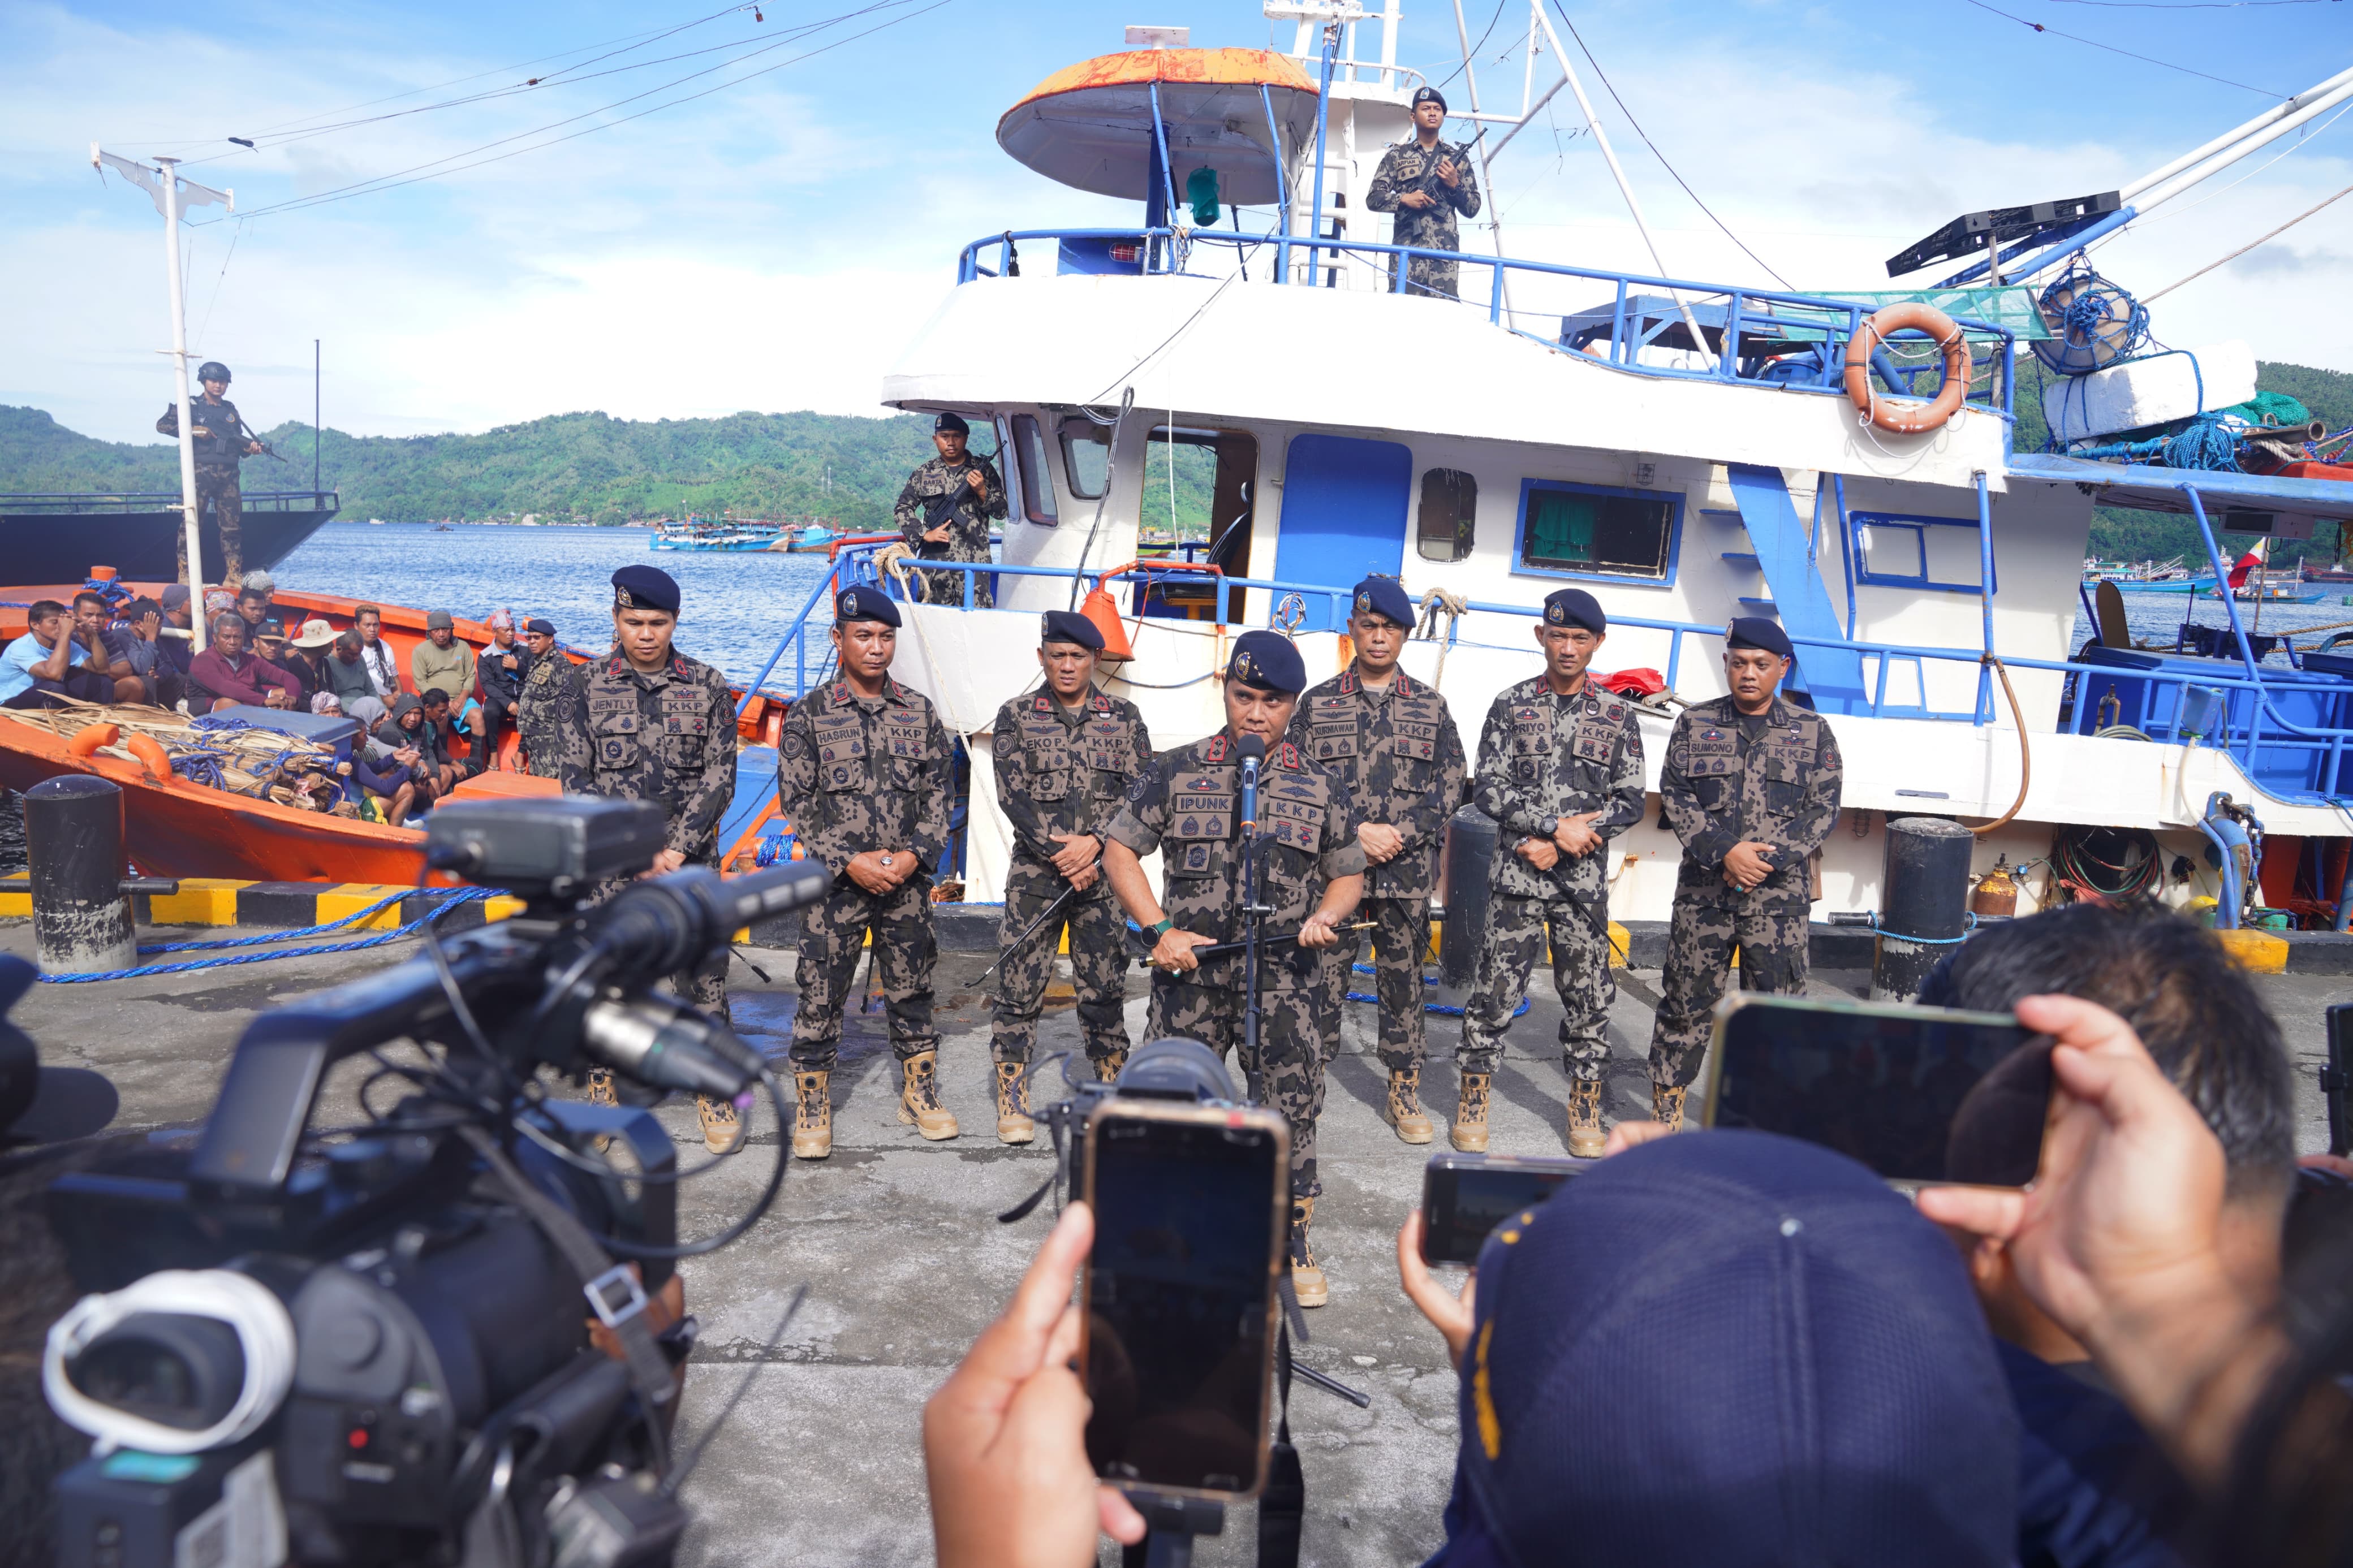 Konferensi Pers Hasil Operasi Pengawasan Sumber Daya Kelautan dan Perikanan dengan Dihentikannya Kapal Ikan Asing Berbendera Filipina di Samudera Pasifik WPP 717